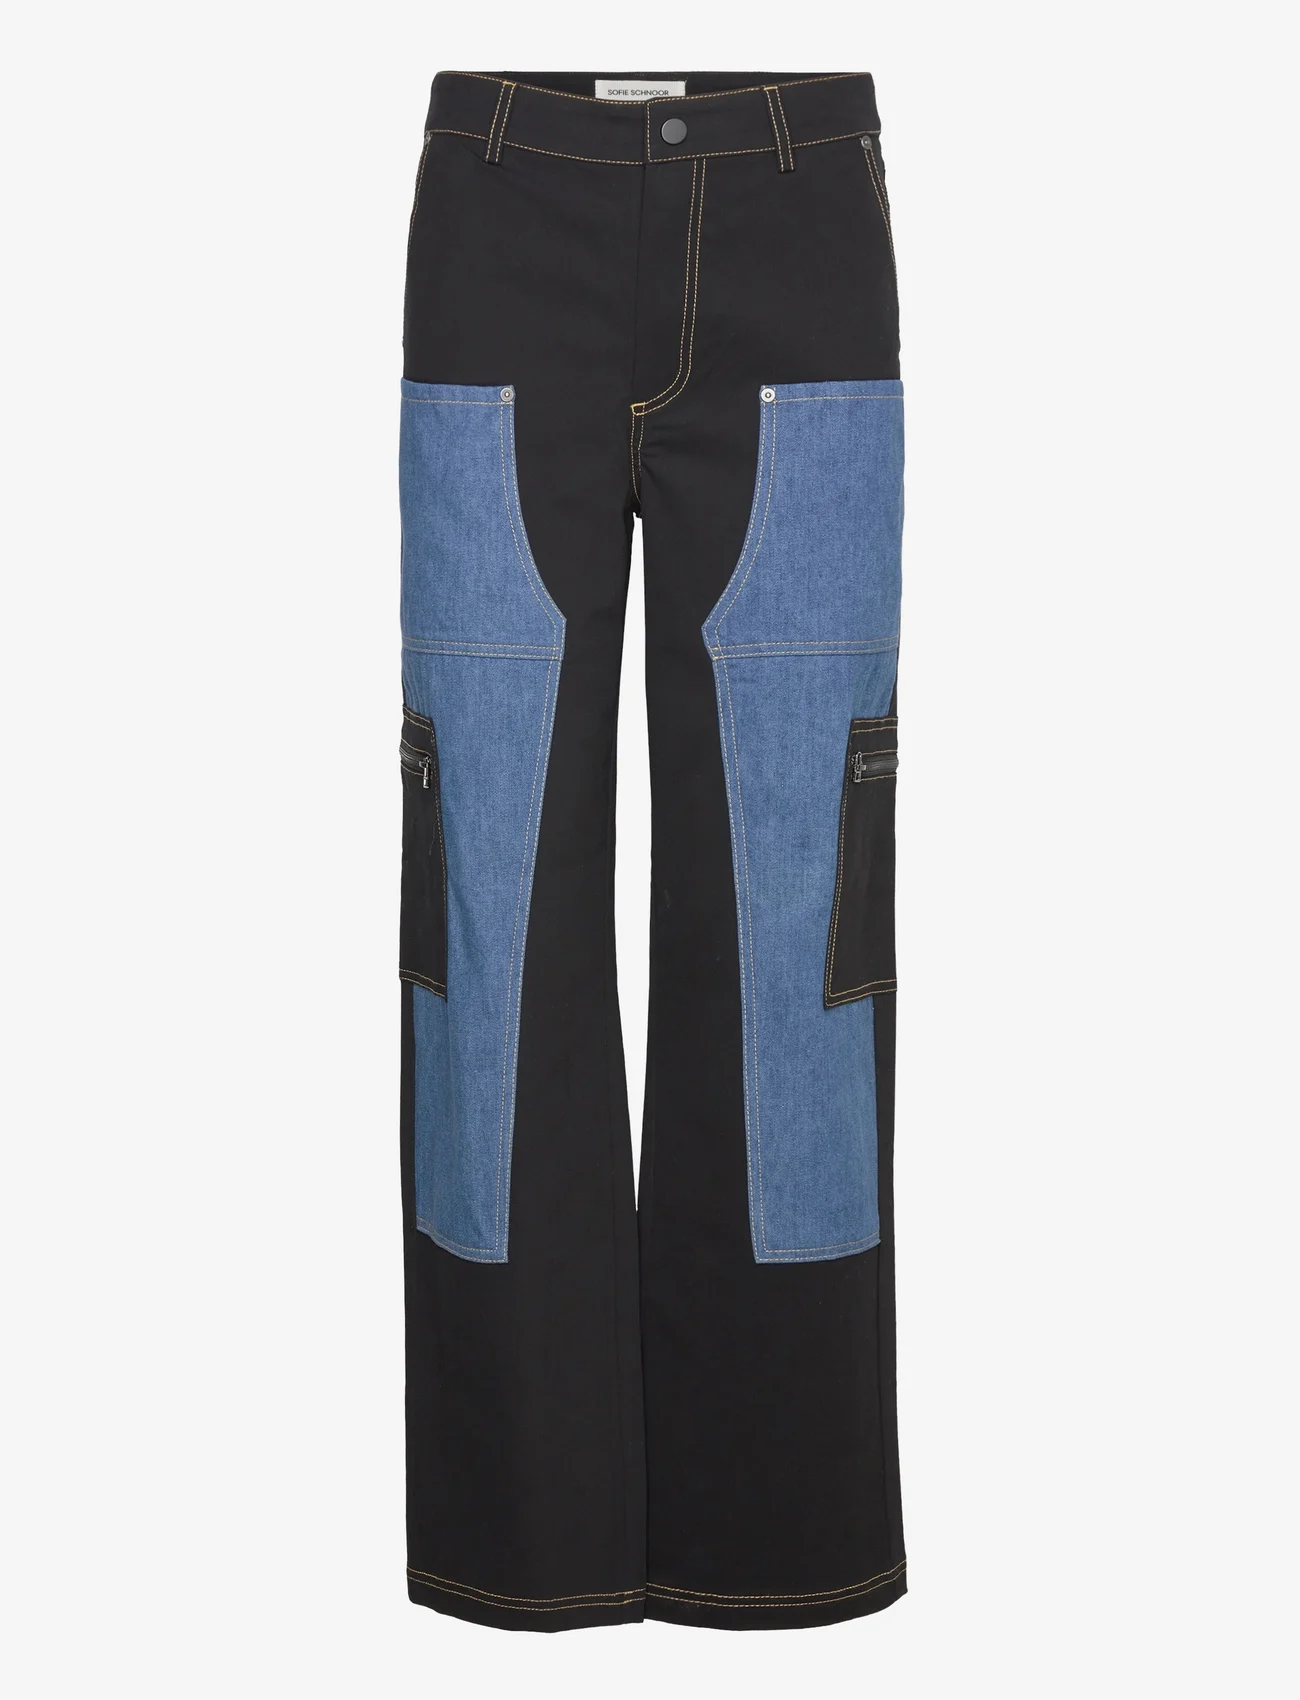 Sofie Schnoor - Trousers - vida jeans - black - 0